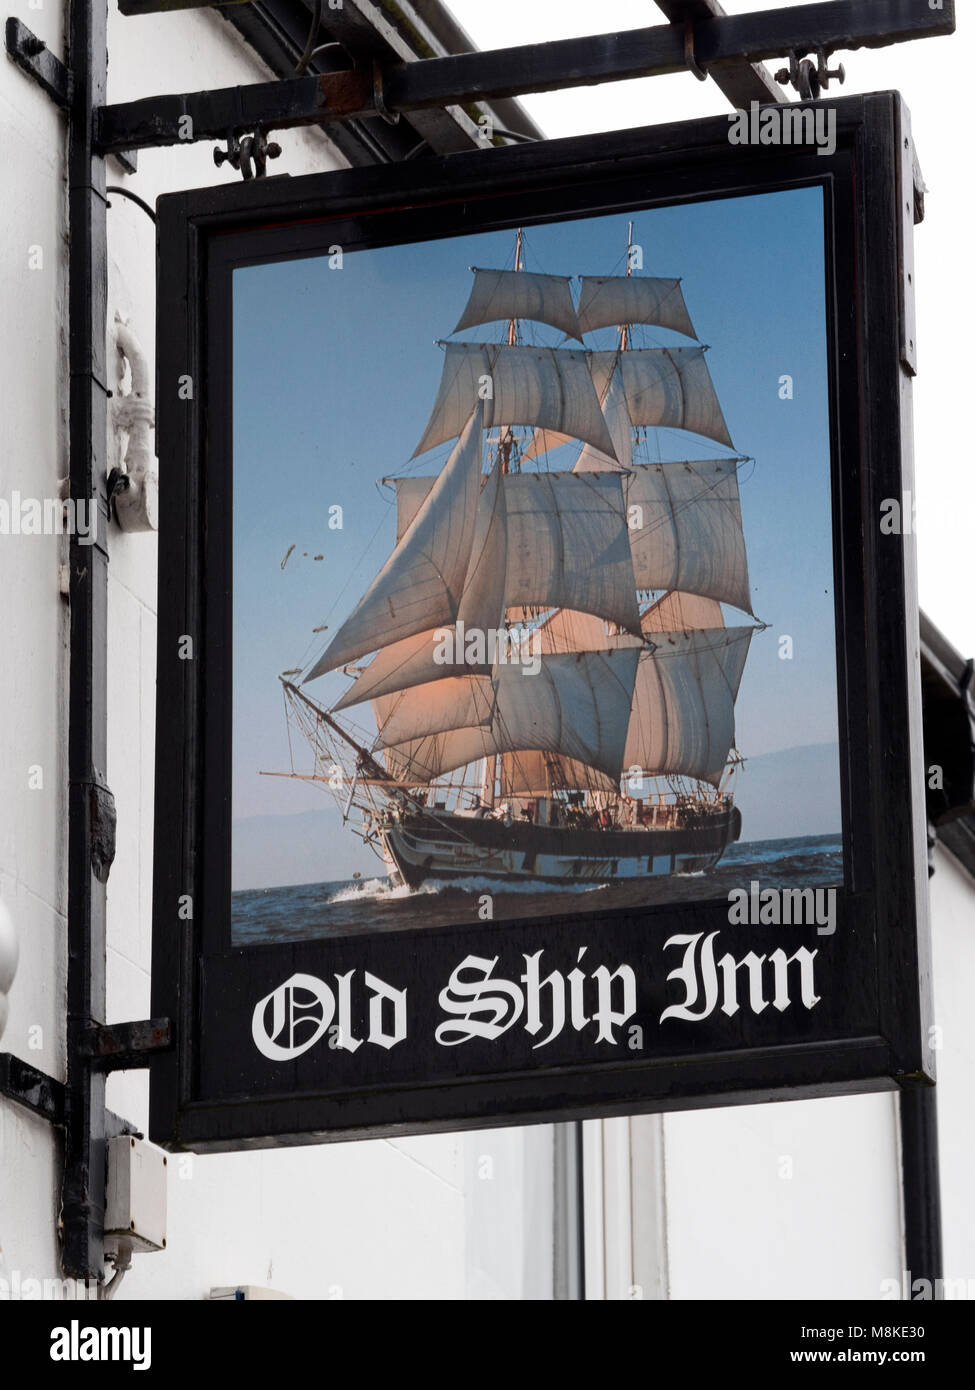 Old Ship Inn hanging sign, 90 St John Street, Bridlington, Yorkshire, England, UK. Stock Photo